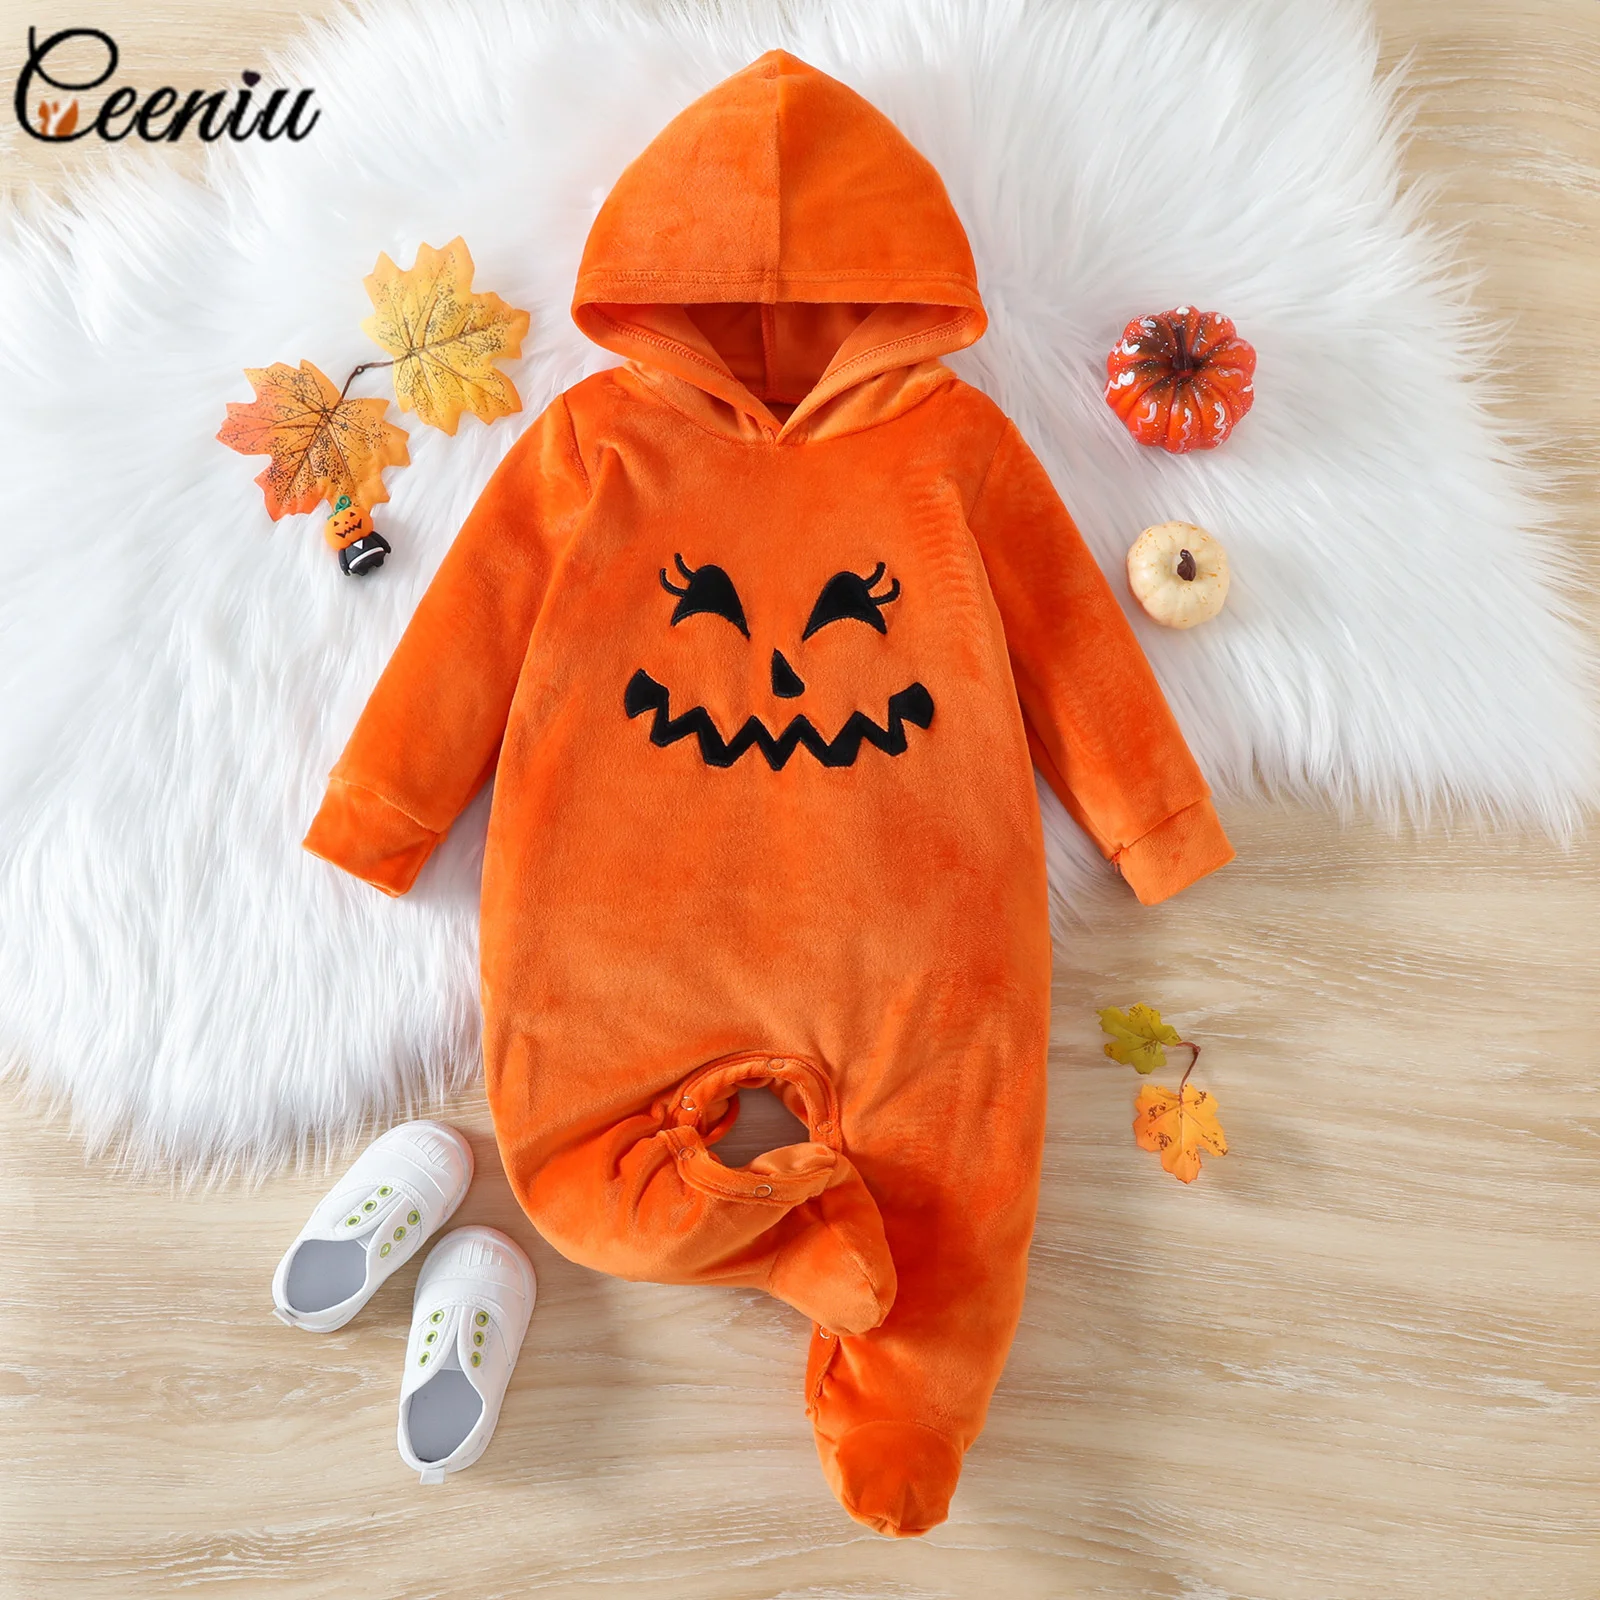 

Ceeniu 0-24M My First Halloween Baby Costume Orange Pumpkin Romper Footed Fleece Jumpsuit For Newborns Baby Halloween Clothes